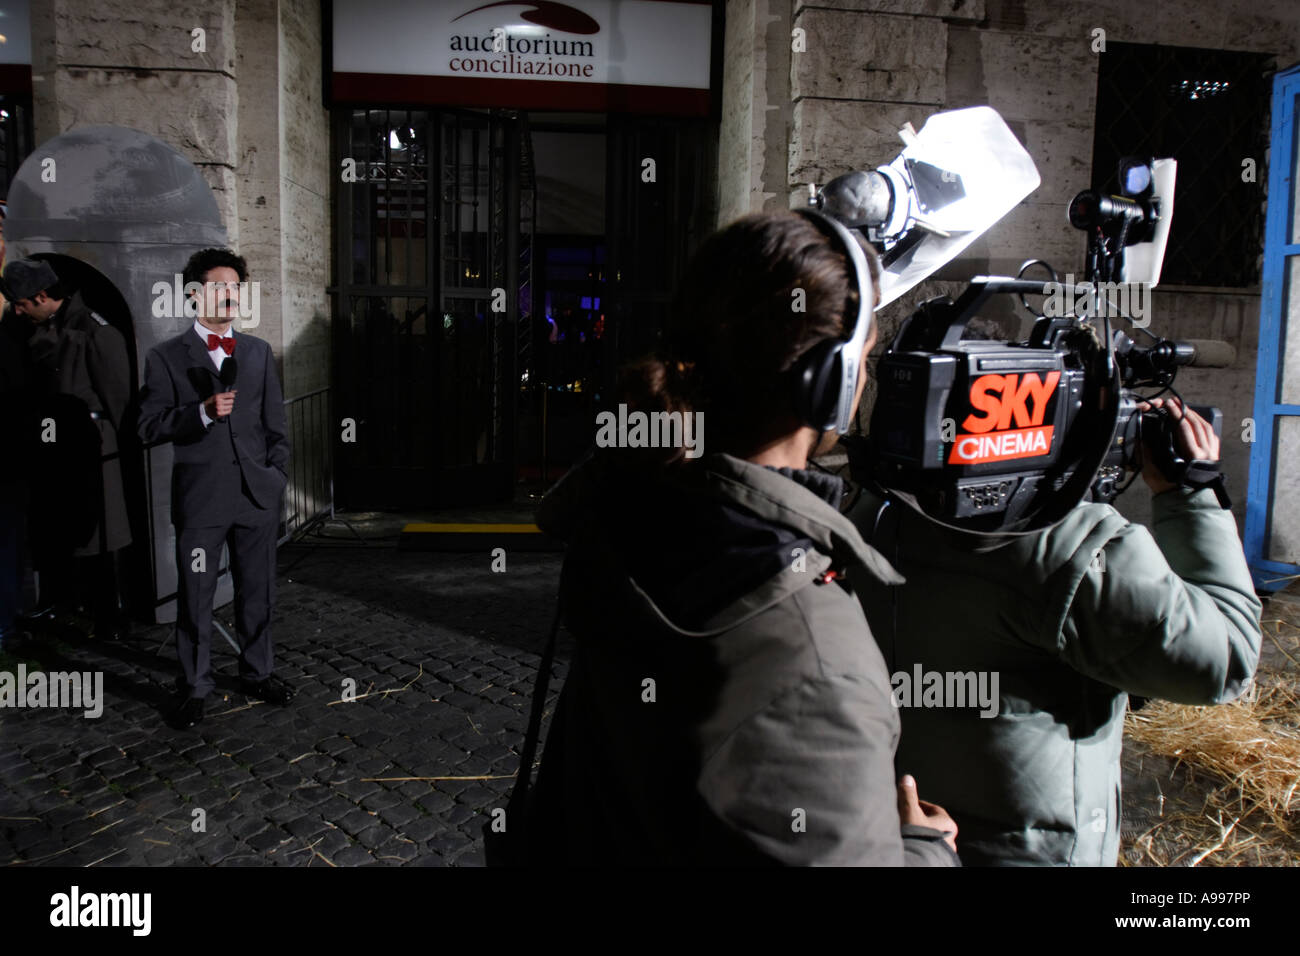 TV crew films at the premiere of 'Borat' film in Rome, Italy Stock Photo